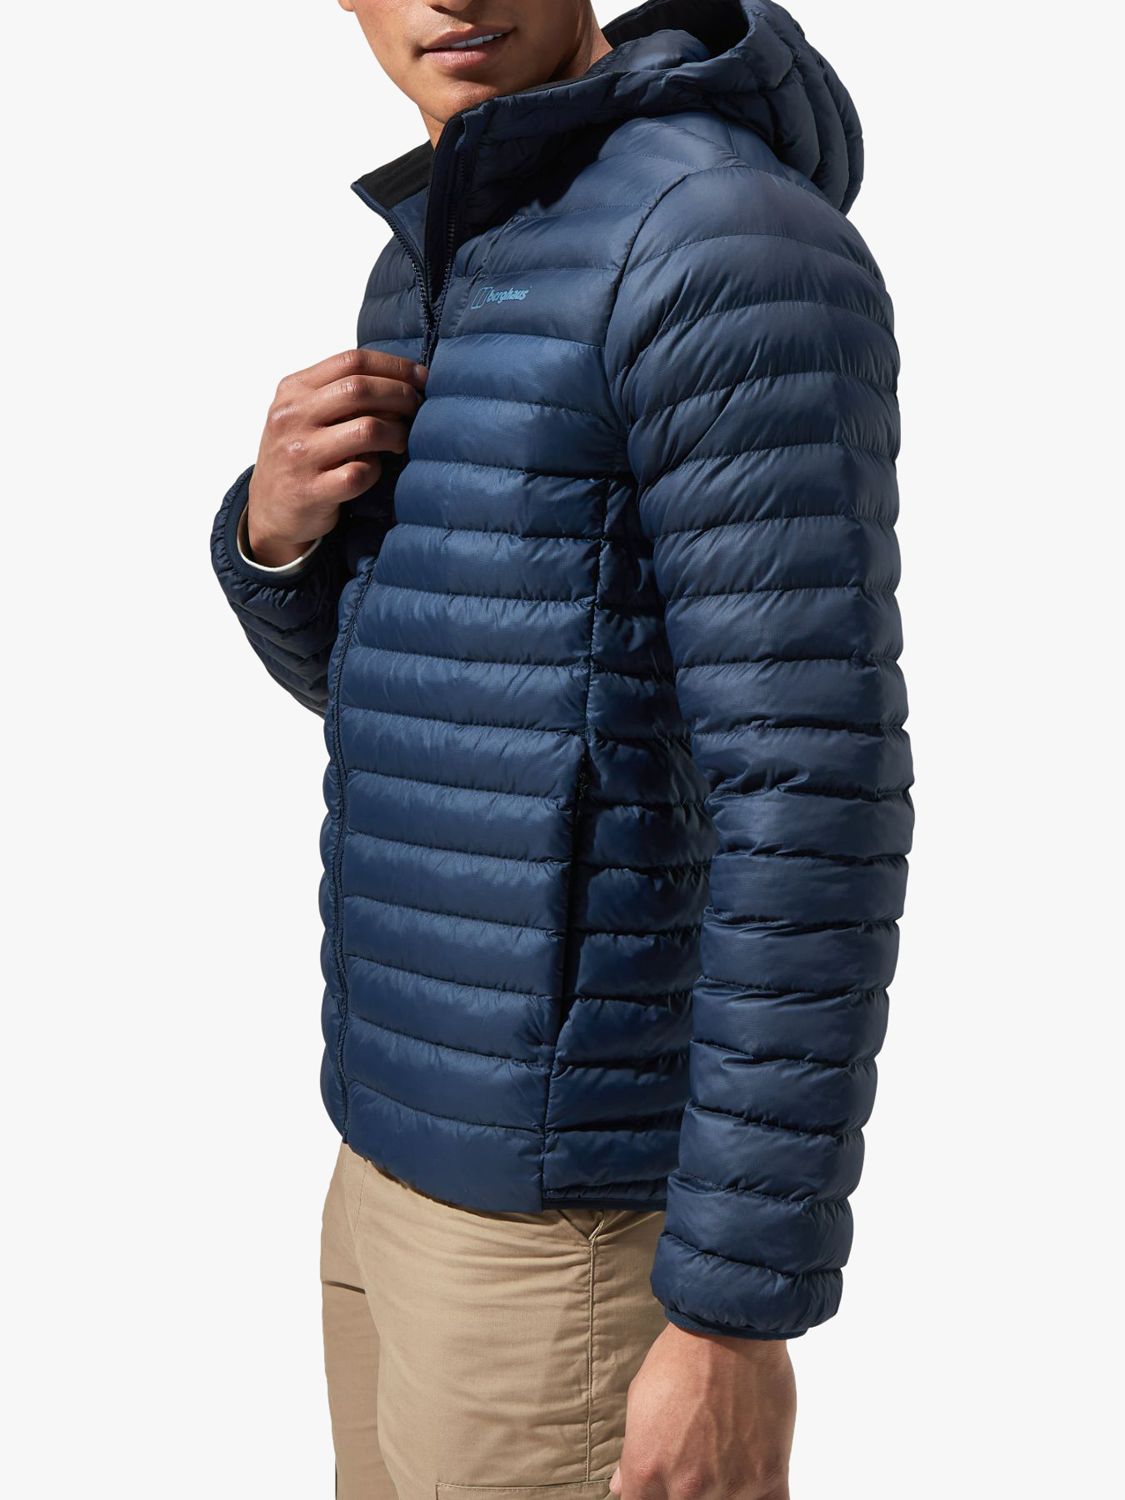 Berghaus Vaskye Men's Insulated Jacket, Dusk/Navy Blazer, M